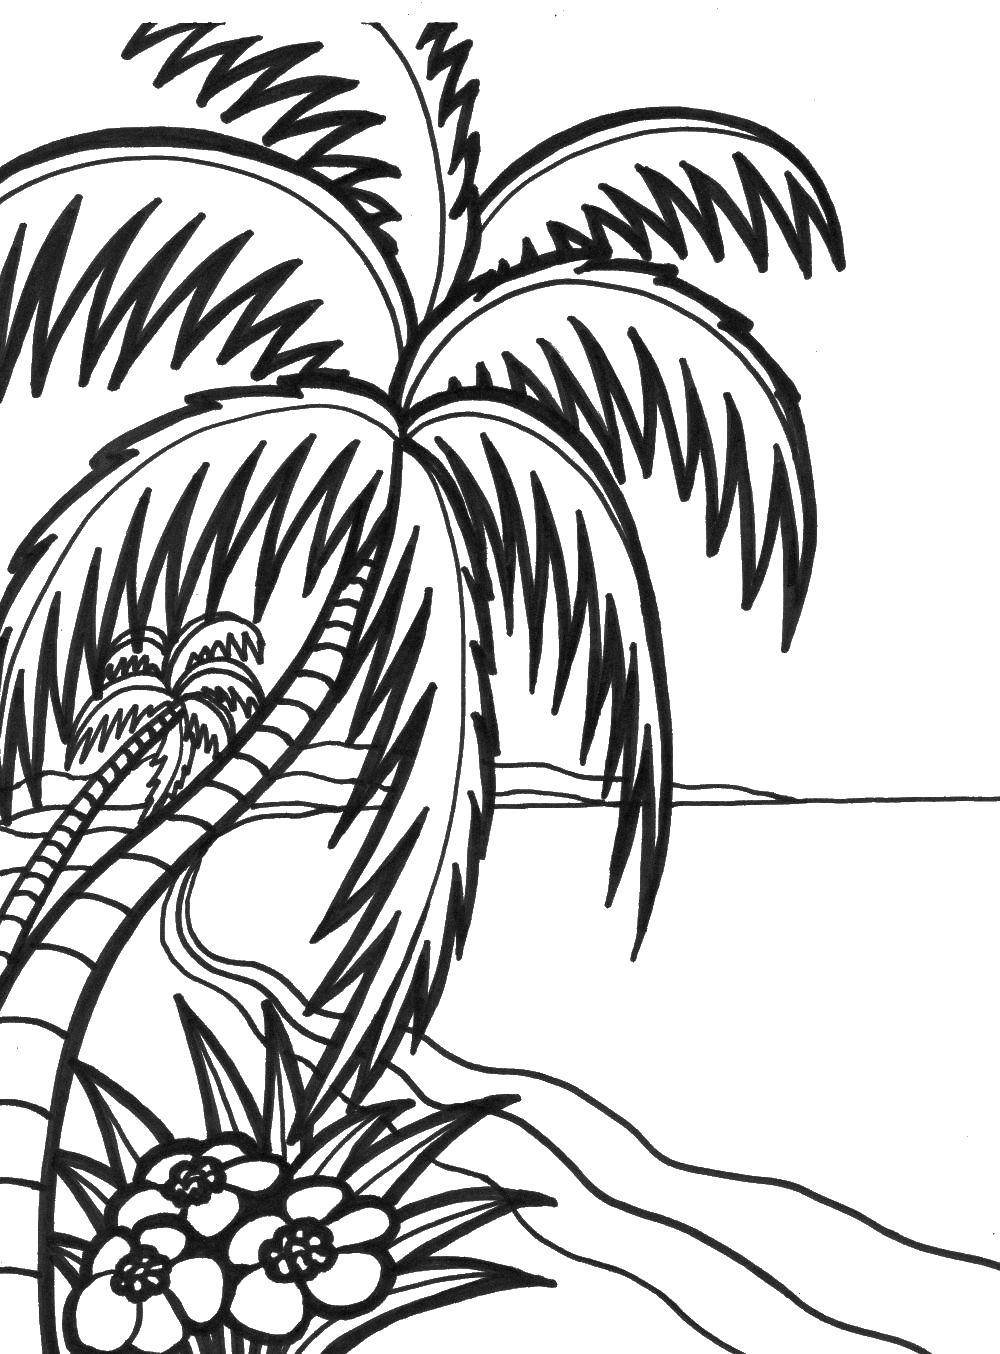 Название: Раскраска Пальма на пляже. Категория: Летний пляж. Теги: пляж, лето, пальма.